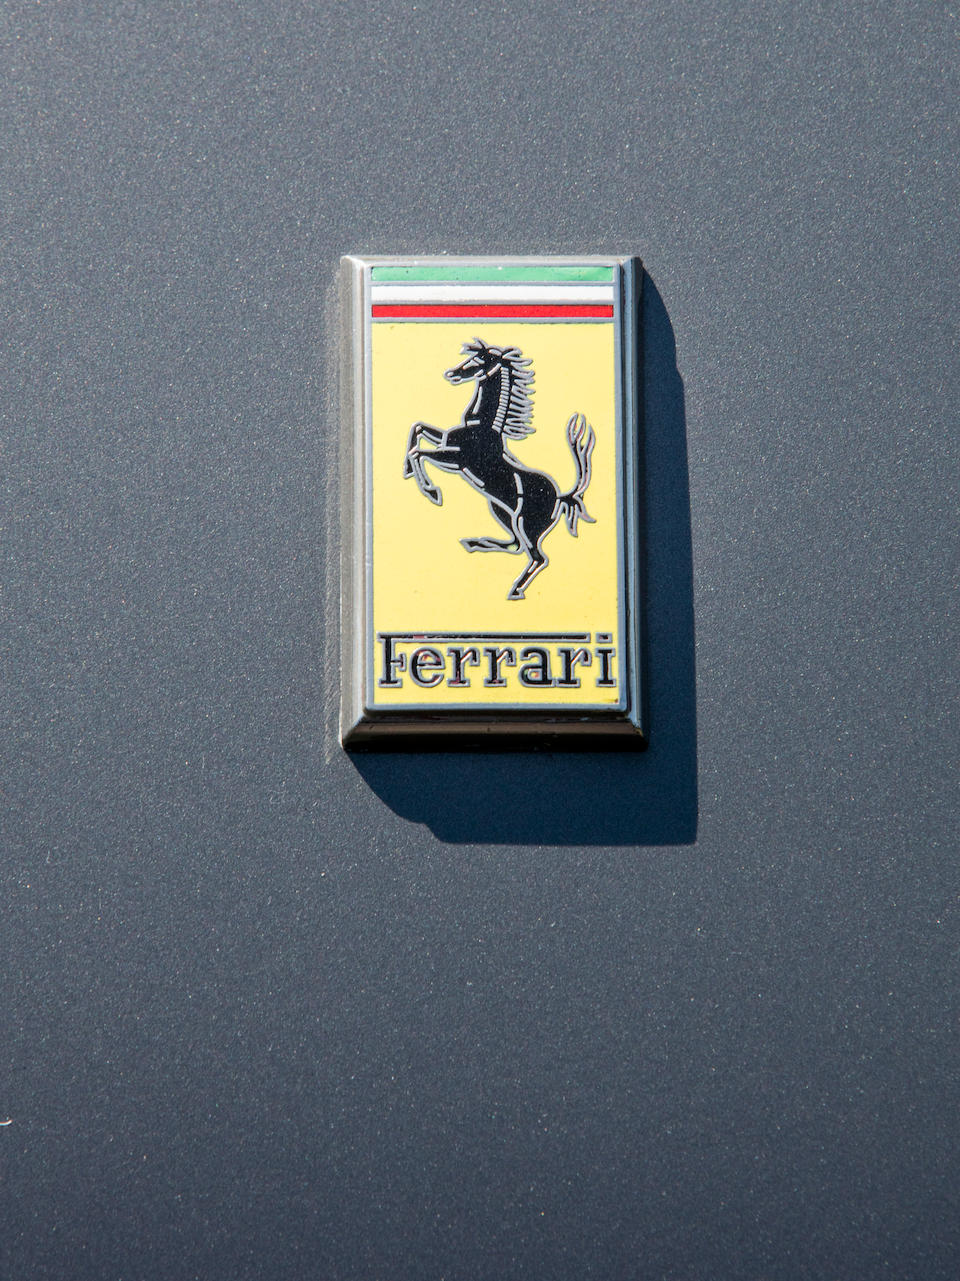 <b>1960 Ferrari 250 GT Series II Cabriolet</b><br />Chassis no. 2039GT<br />Engine no. 2039GT